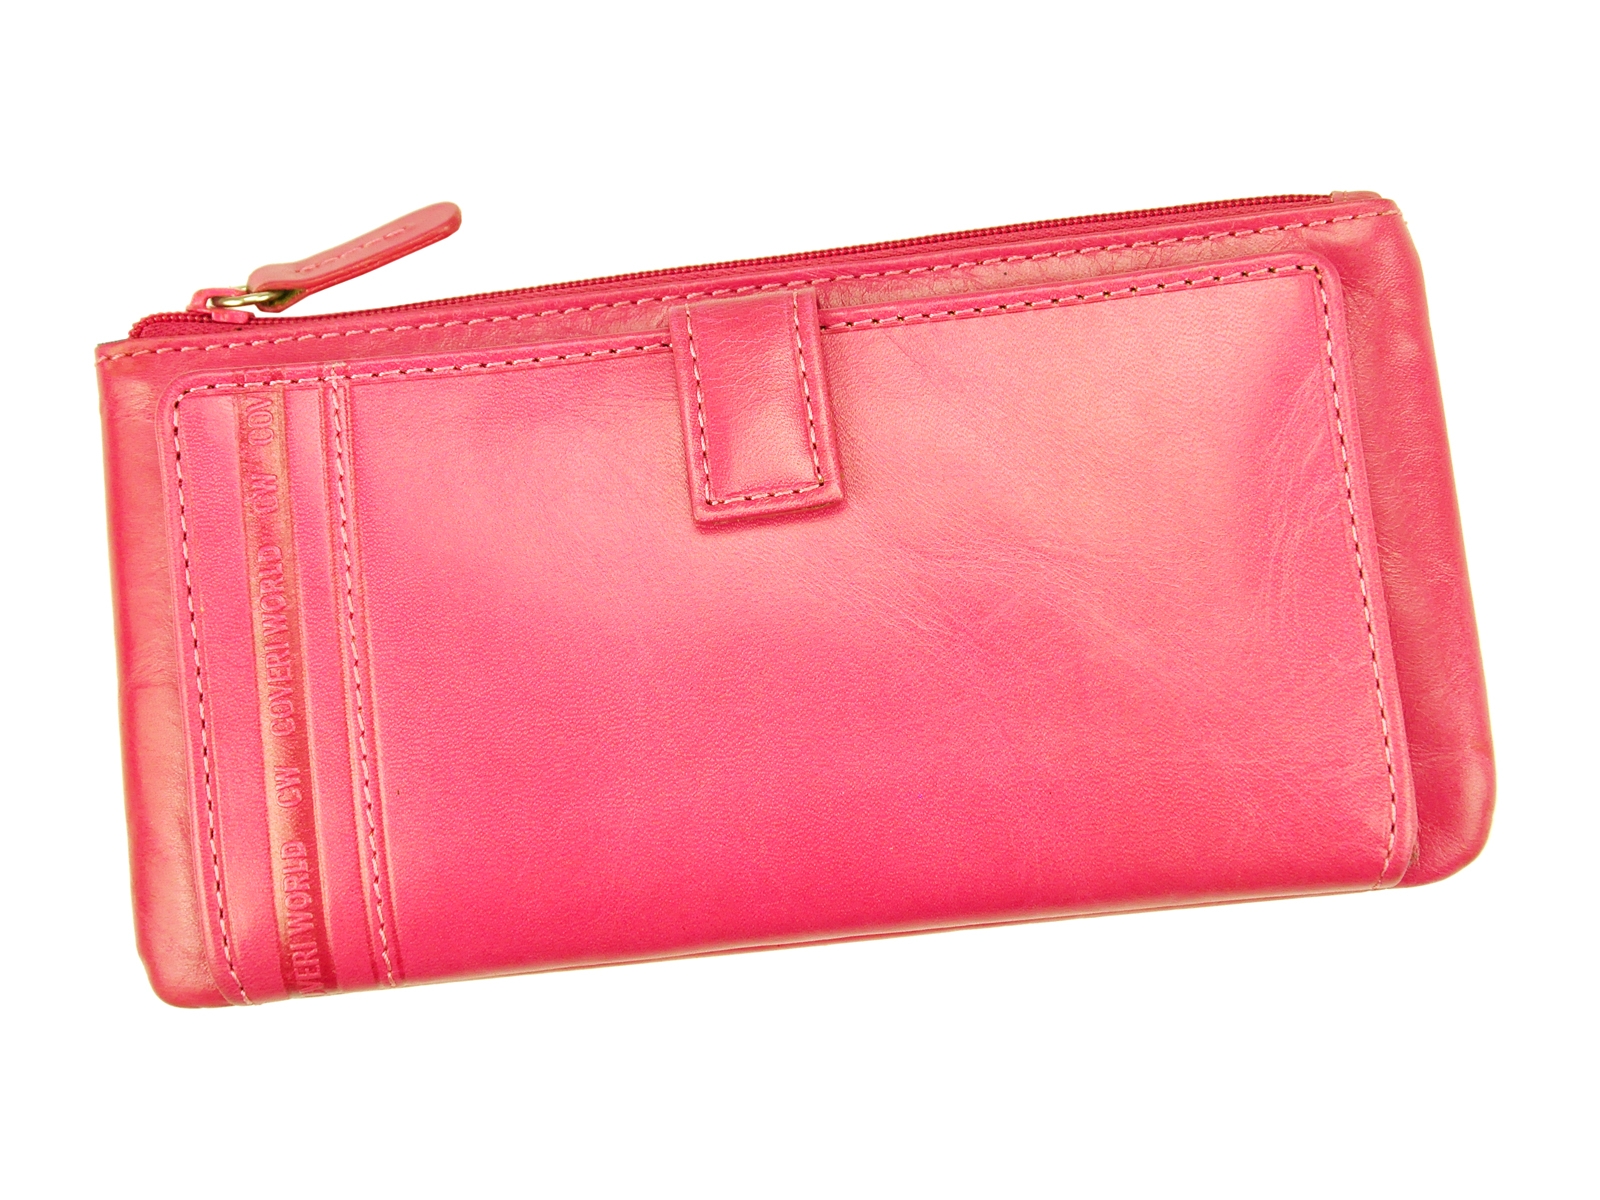 Coveri World Soft Genuine Leather Women Wallet/Purse Pink 518 G02 ...